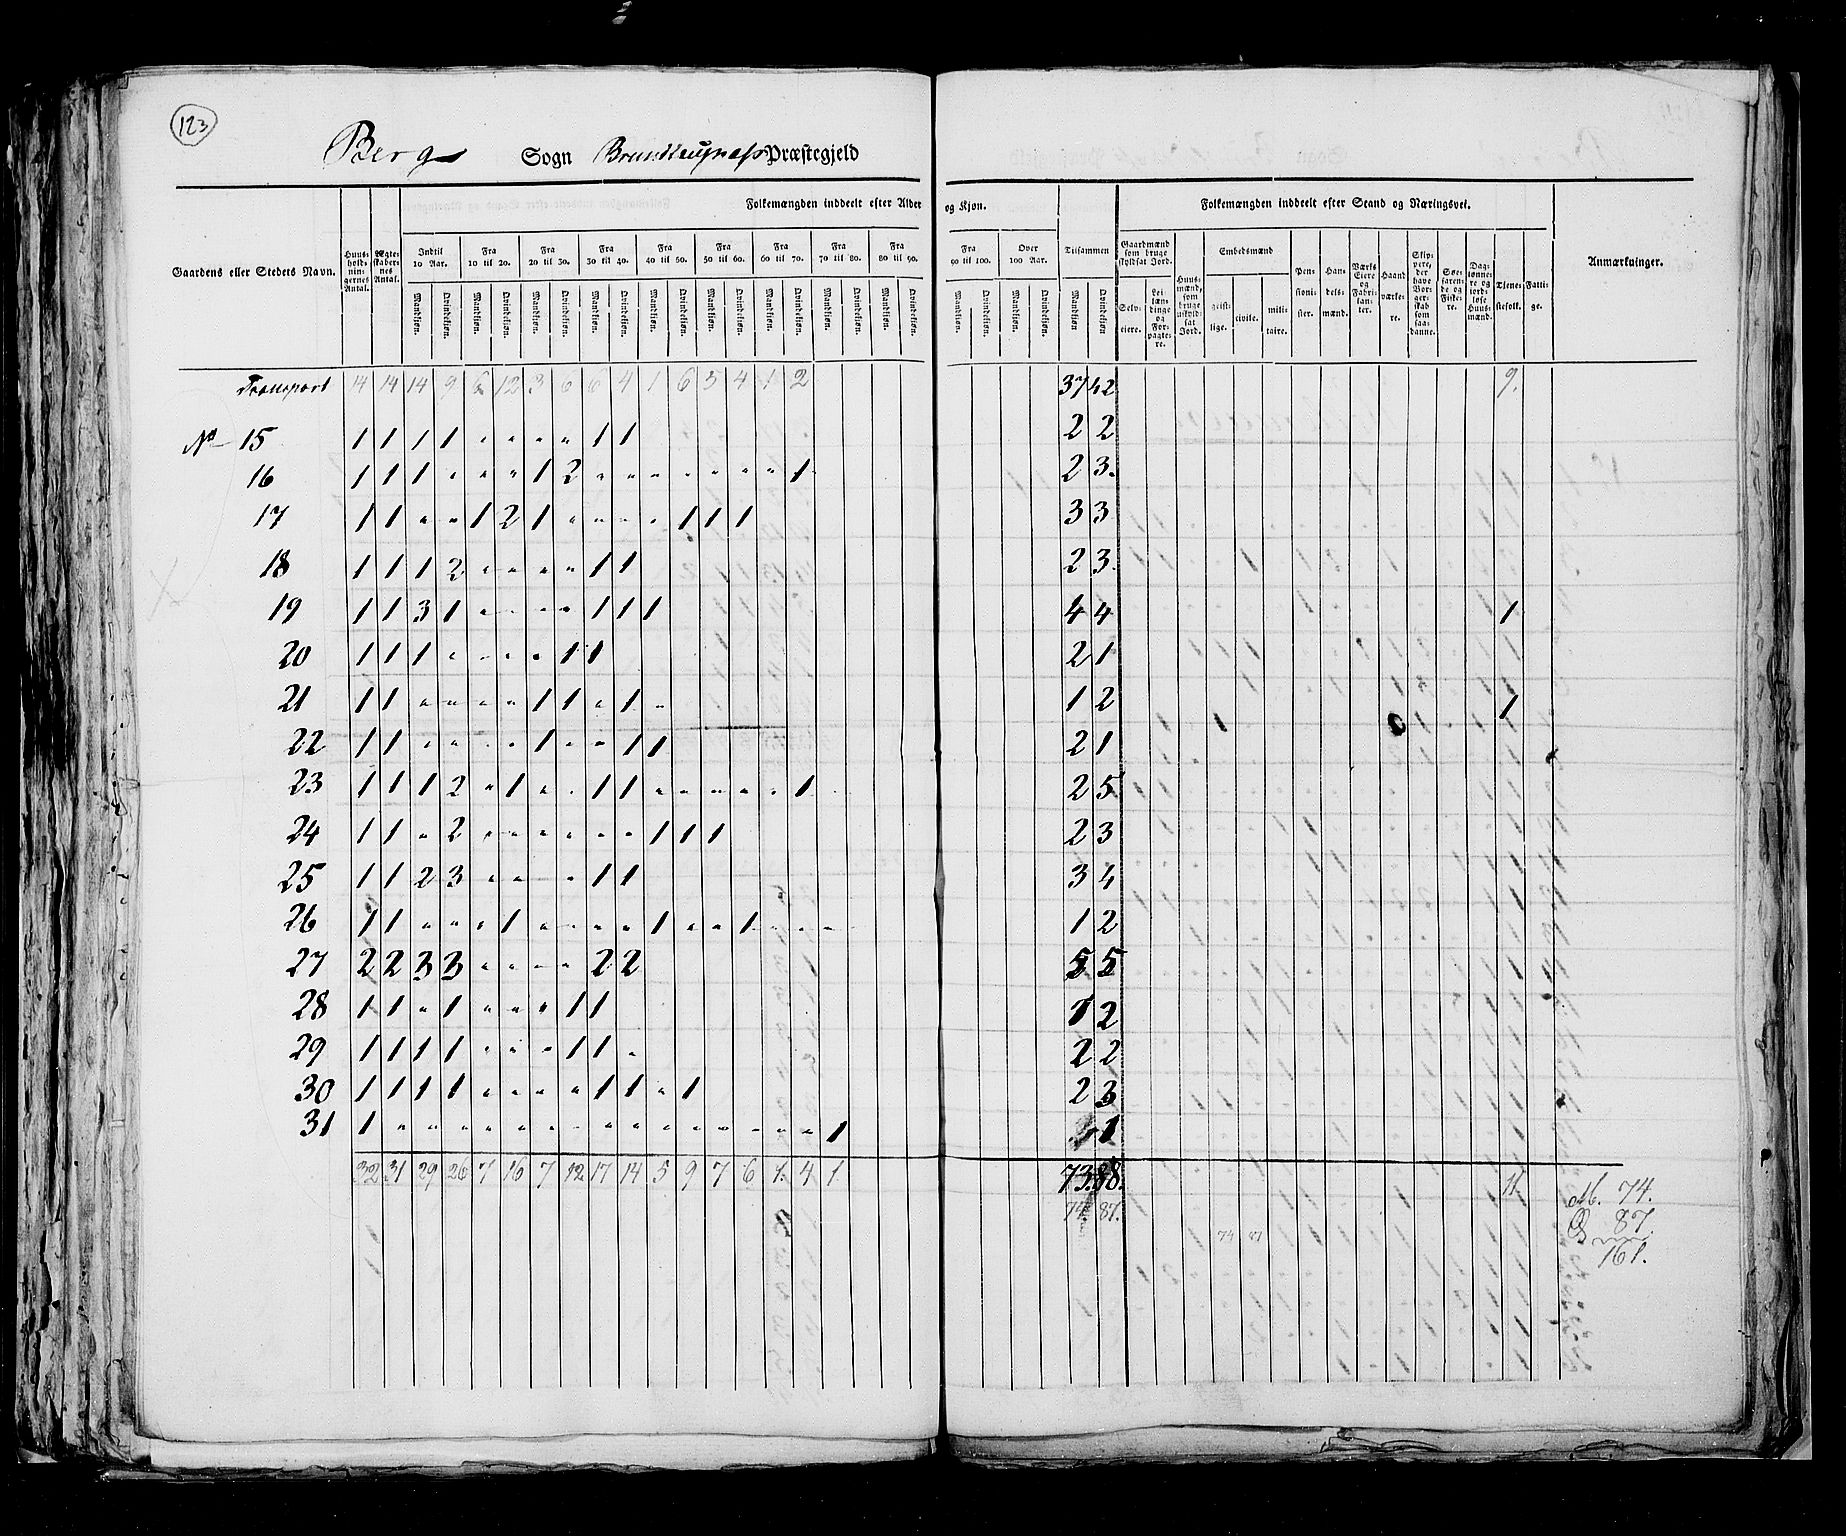 RA, Census 1825, vol. 8: Jarlsberg og Larvik amt, 1825, p. 119-120